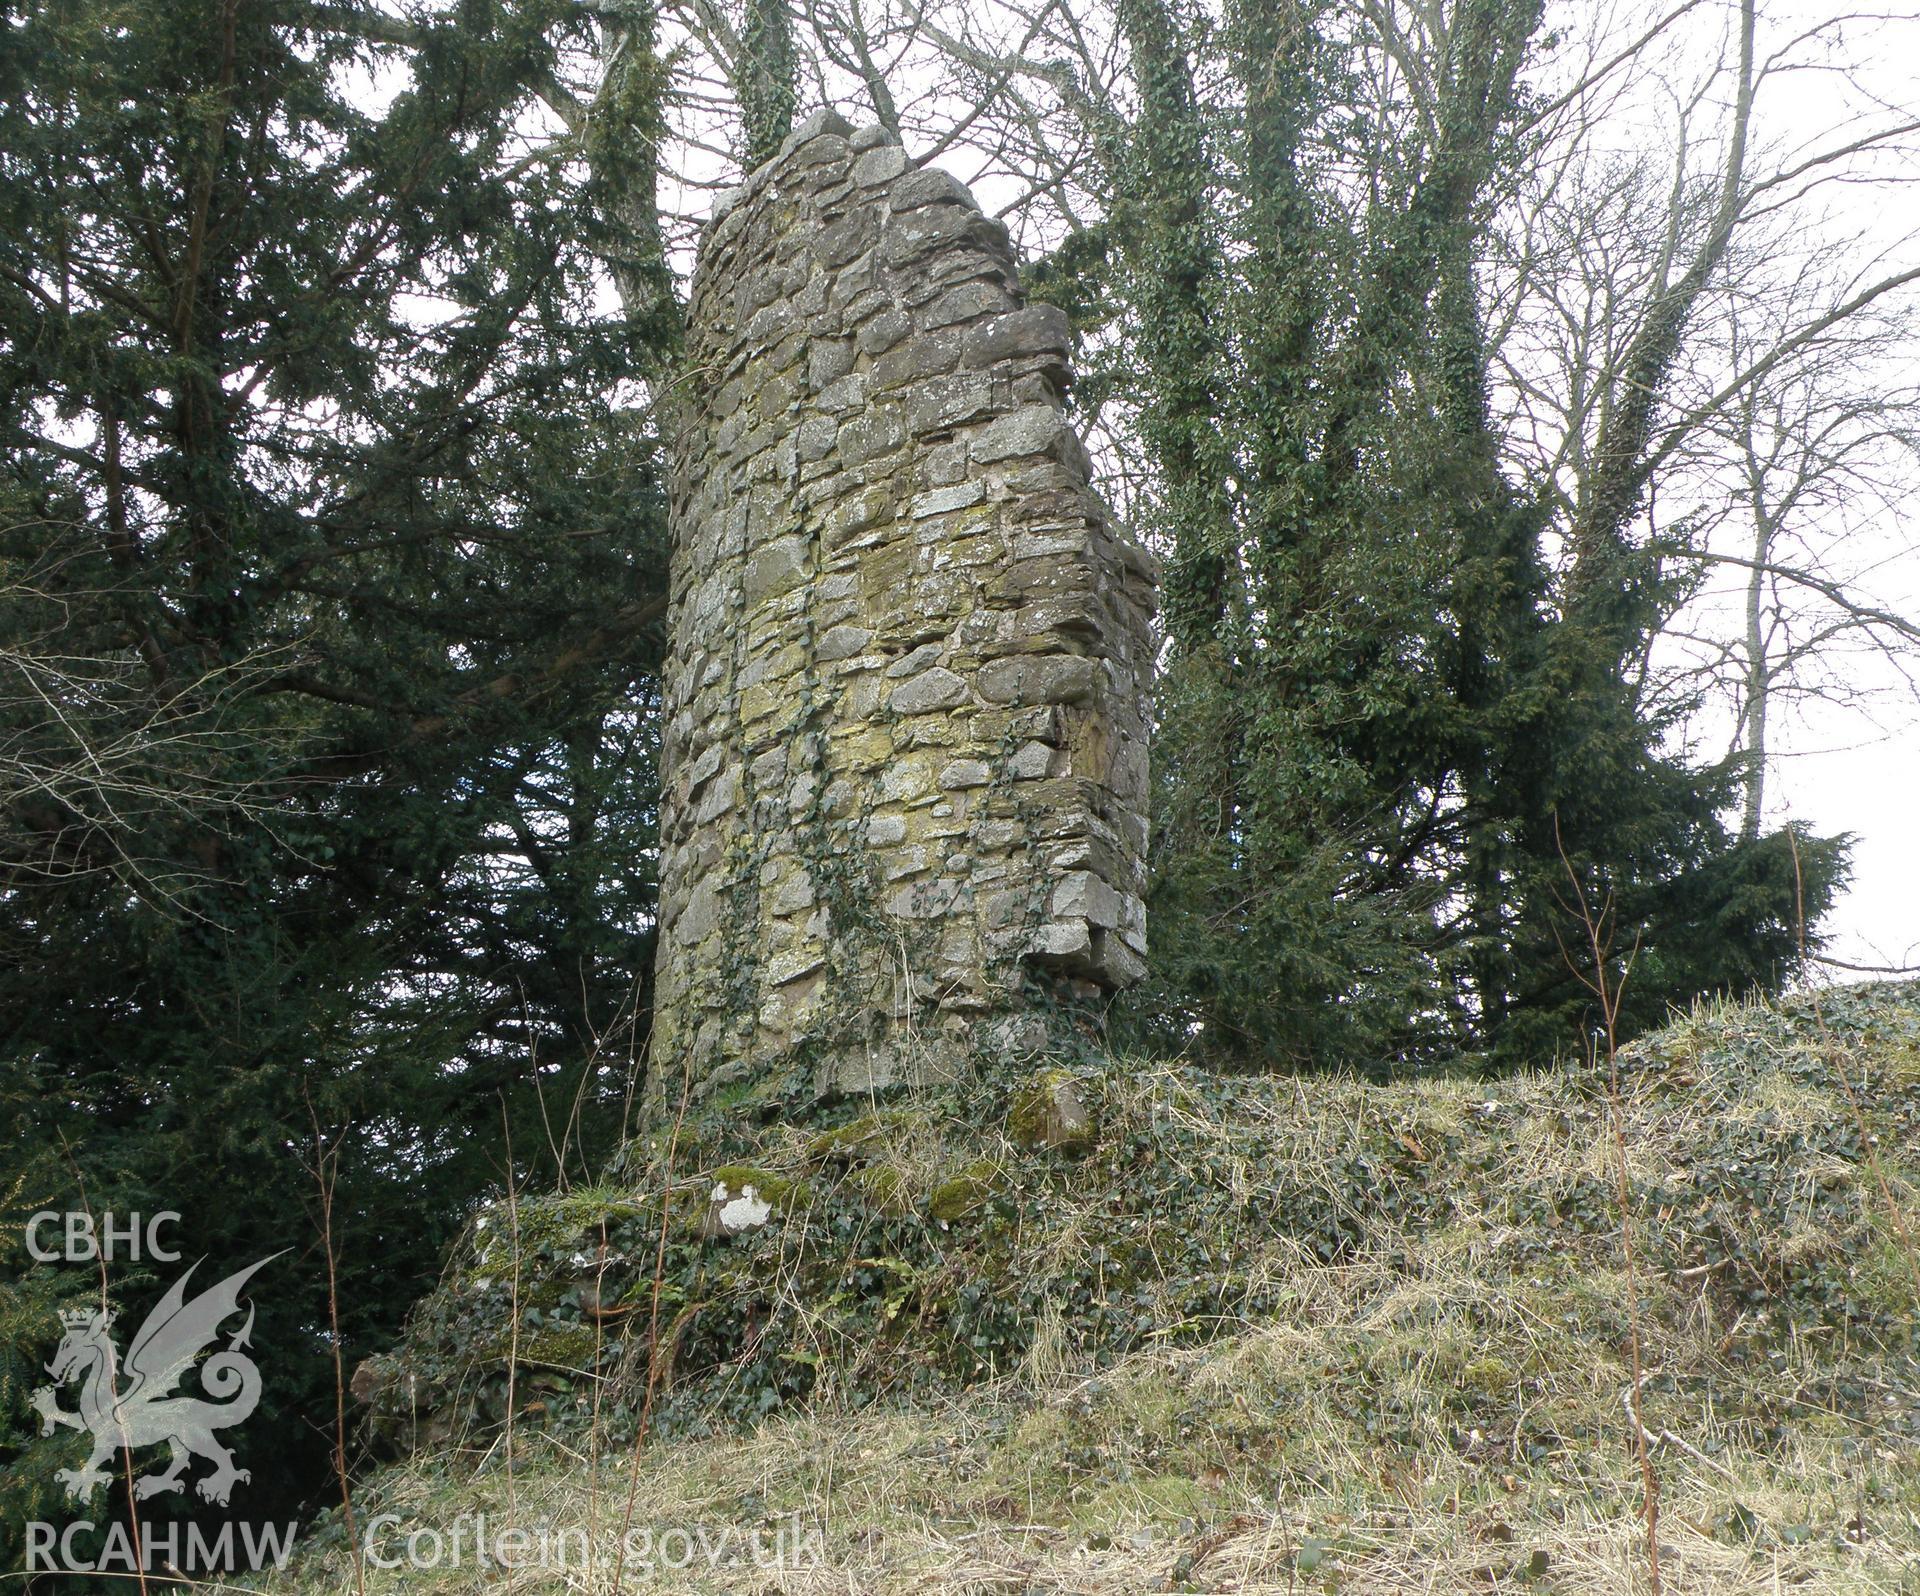 Colour photo of Aberyscir Castle, taken by Paul R. Davis, 13th March 2010.